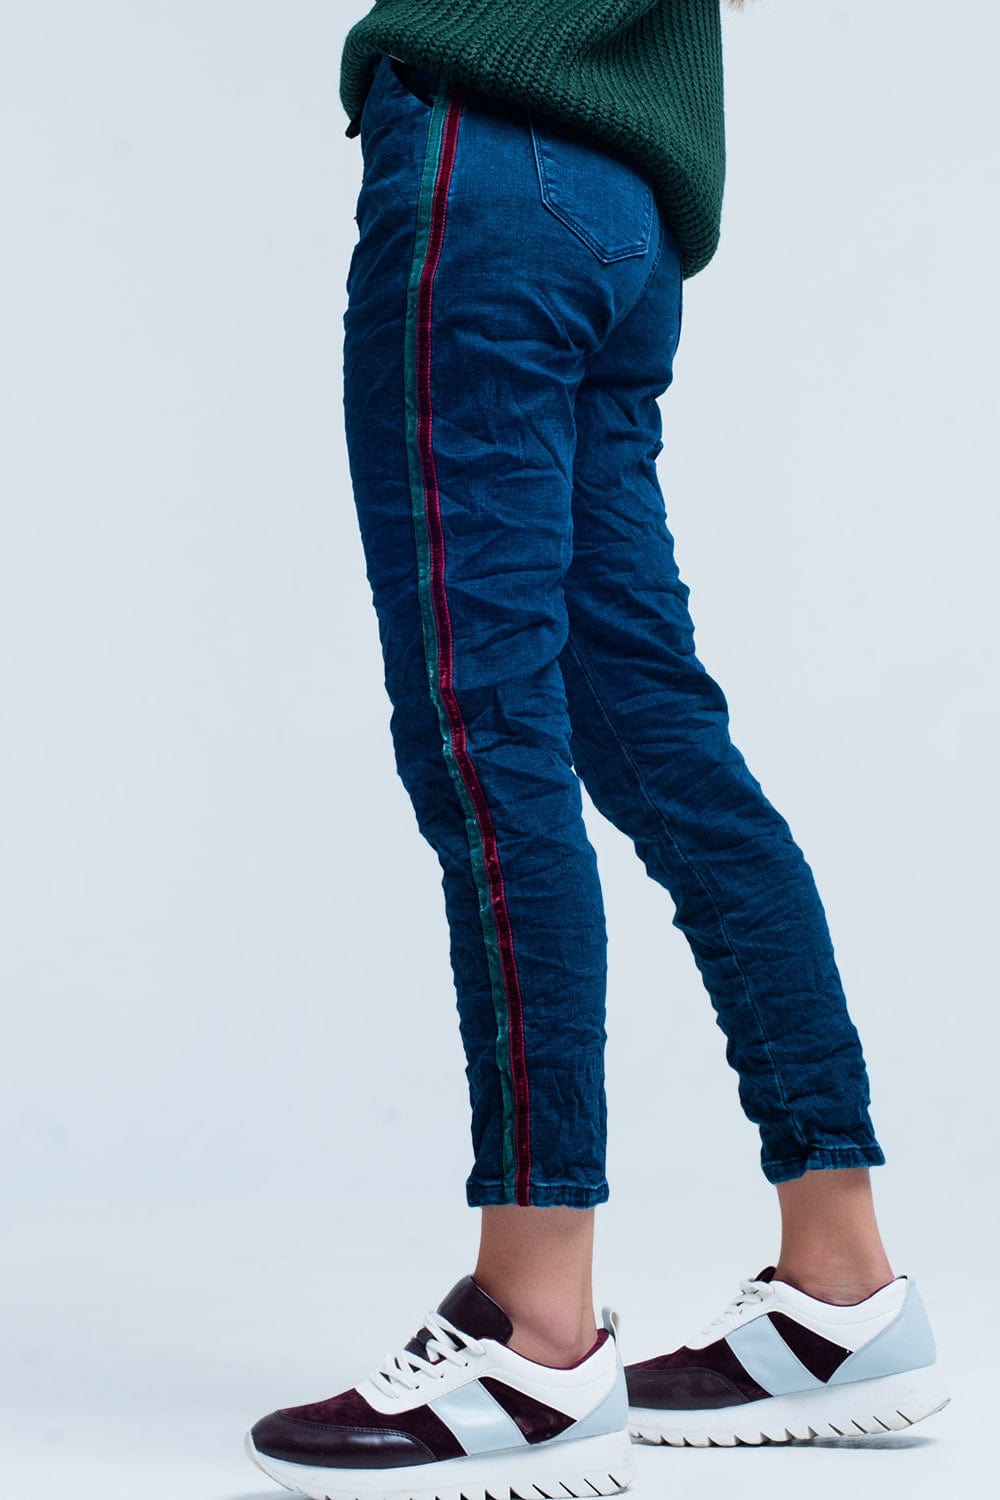 Q2 Women's Jean Blue Baggy Jeans multi-color side stripe